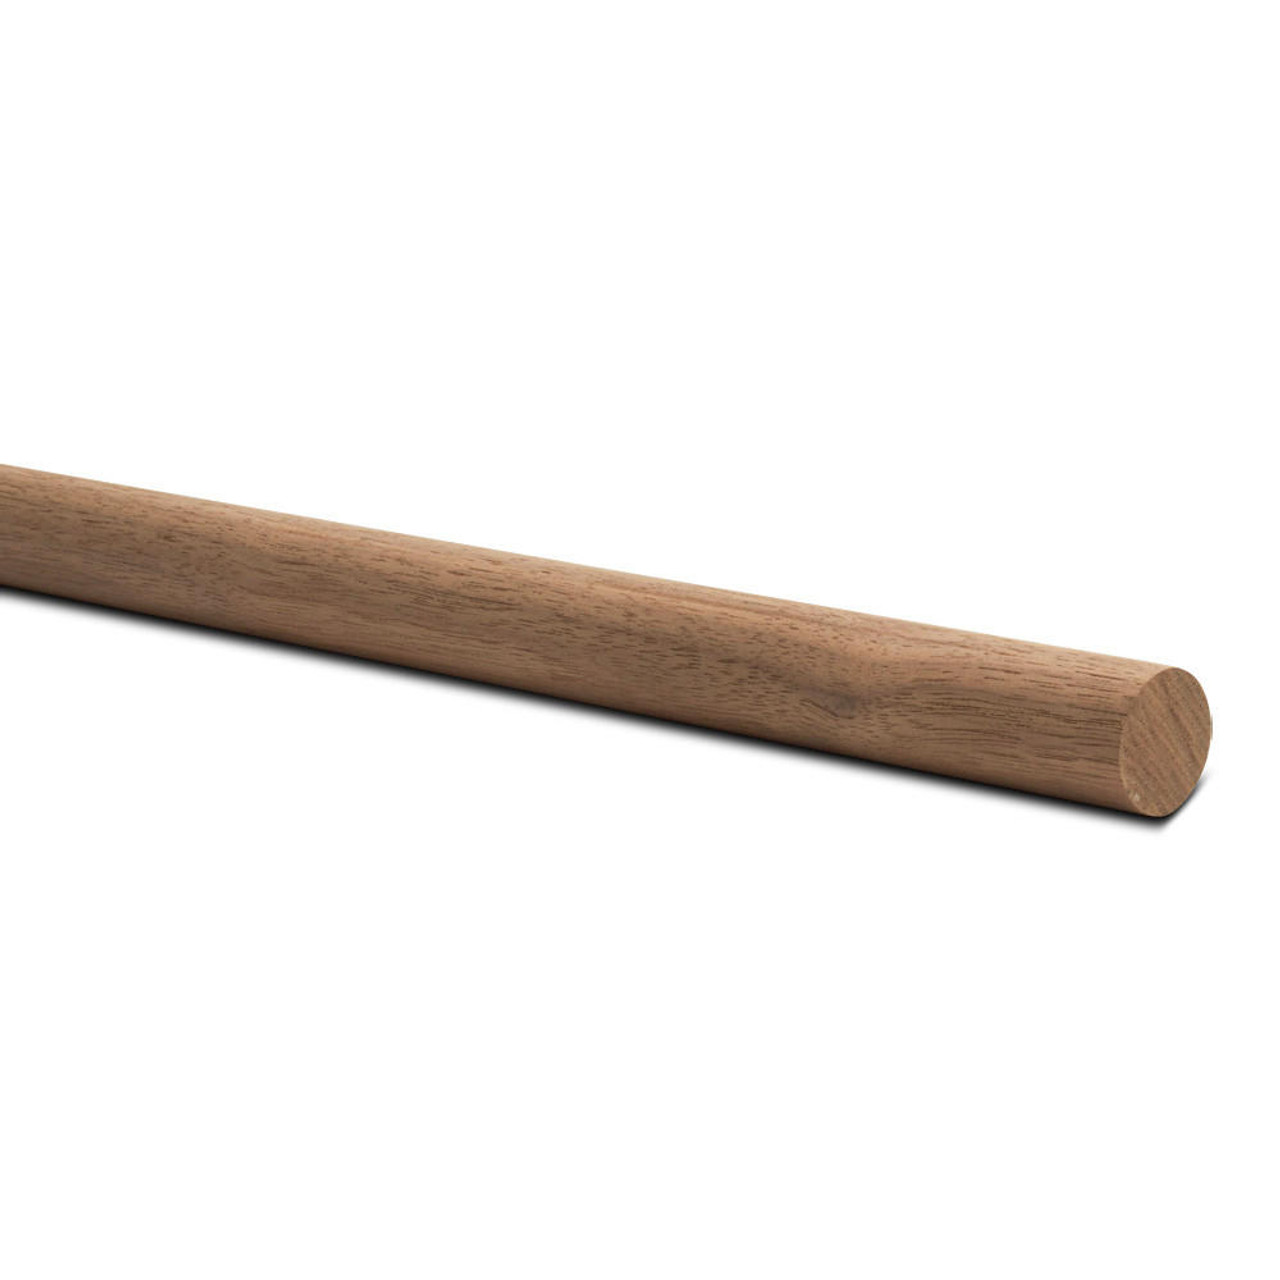 Wooden Dowel Rods - 6 inch Dowel Rod 1/4-3/16-1/8 Indonesia